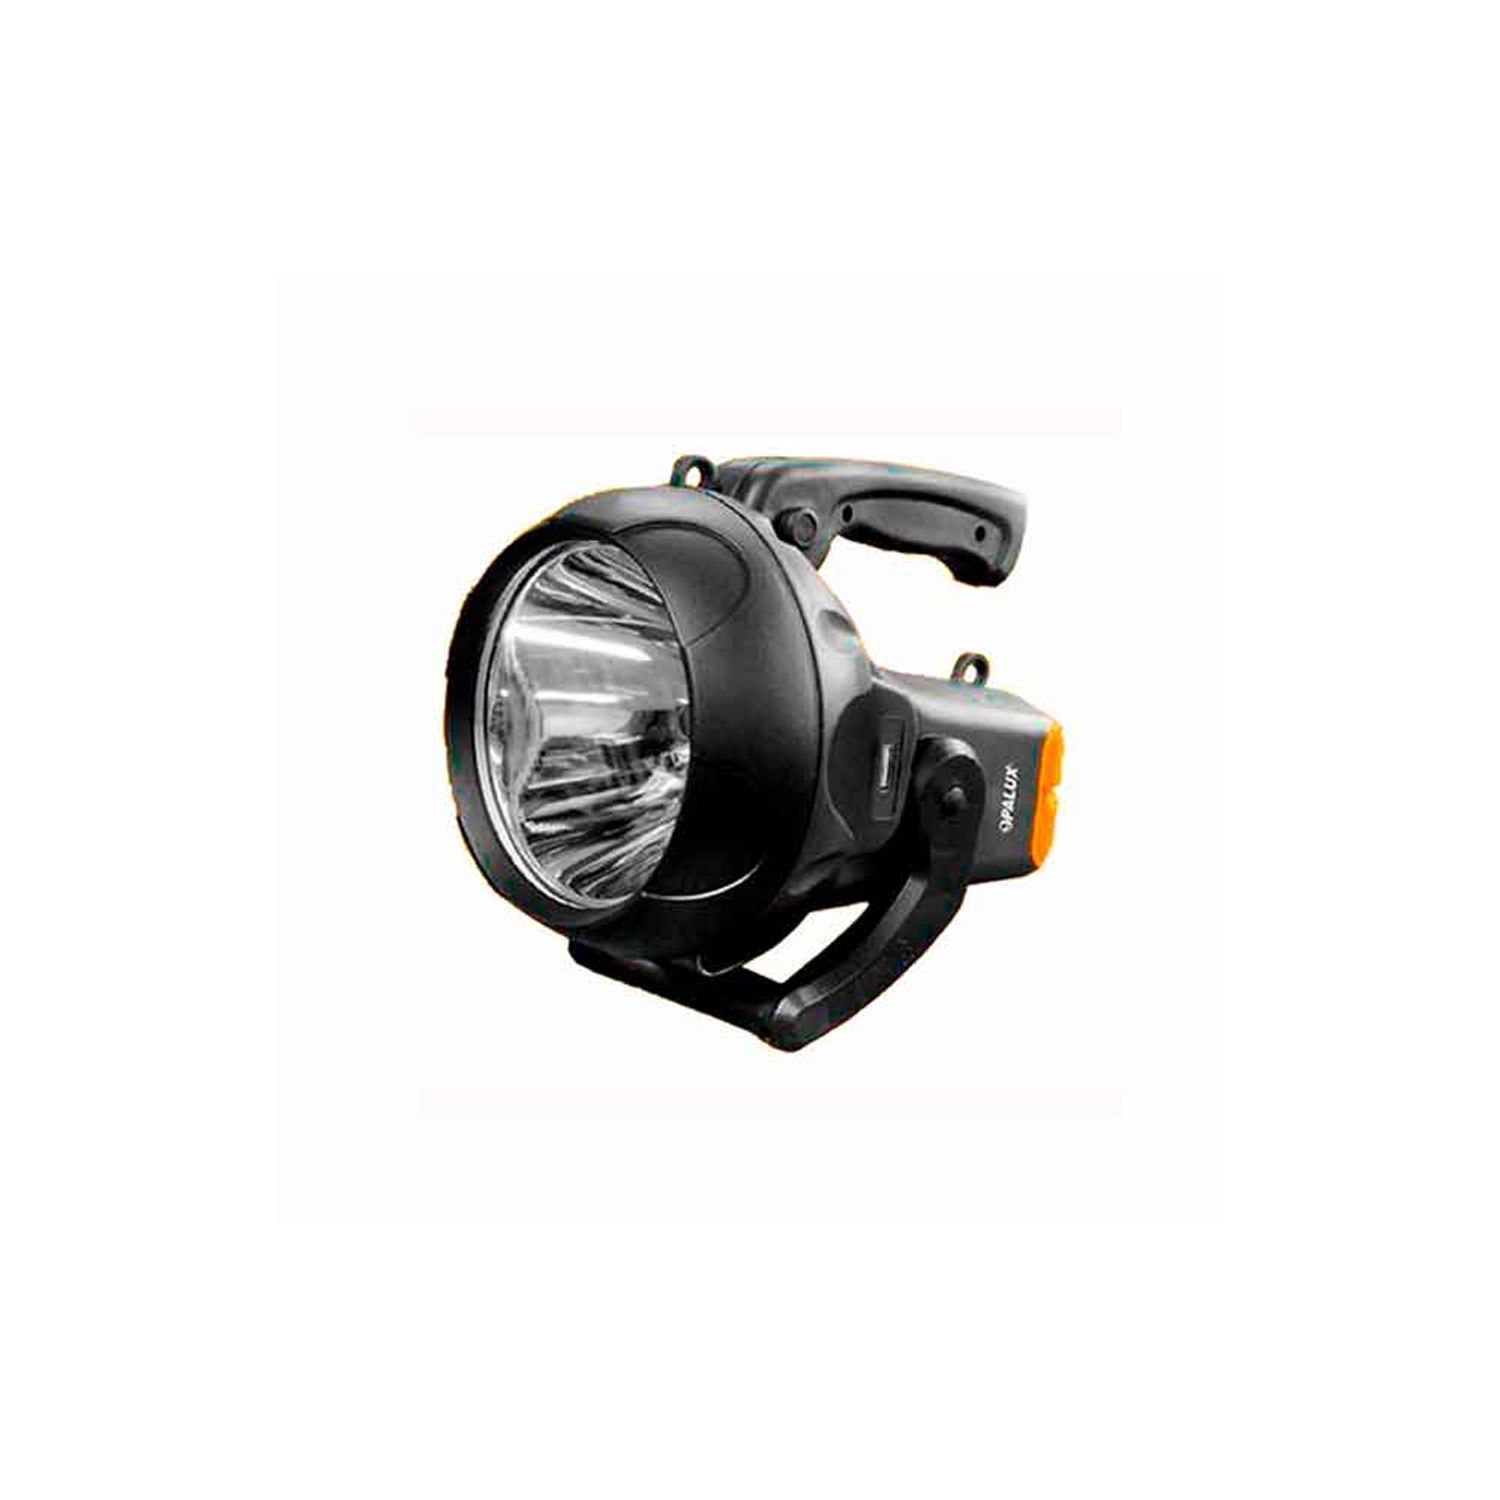 Linterna LED Recargable Opalux OP-4251A